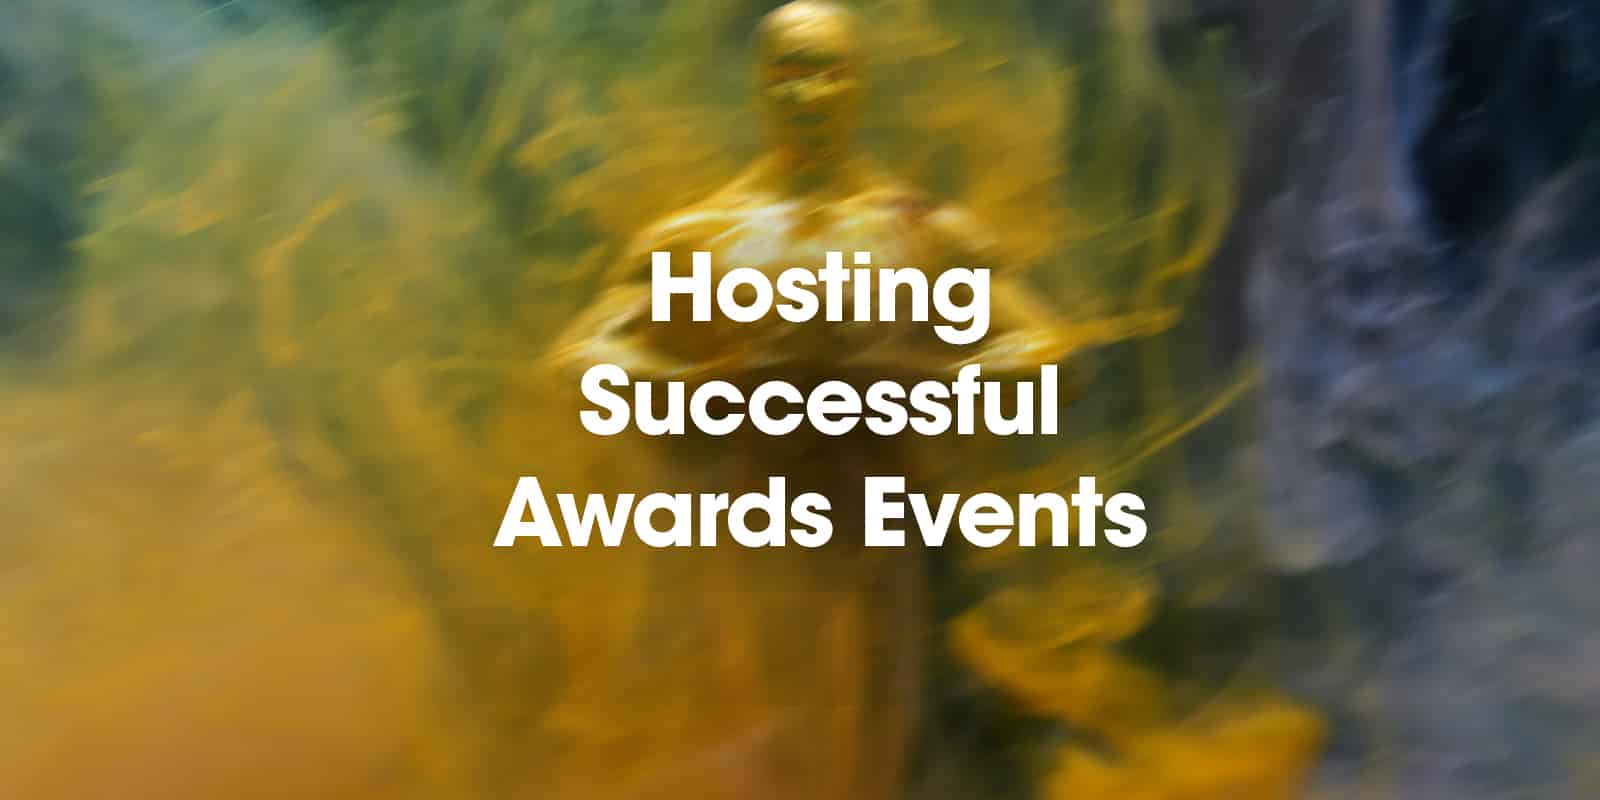 Awards-event-Success-blog